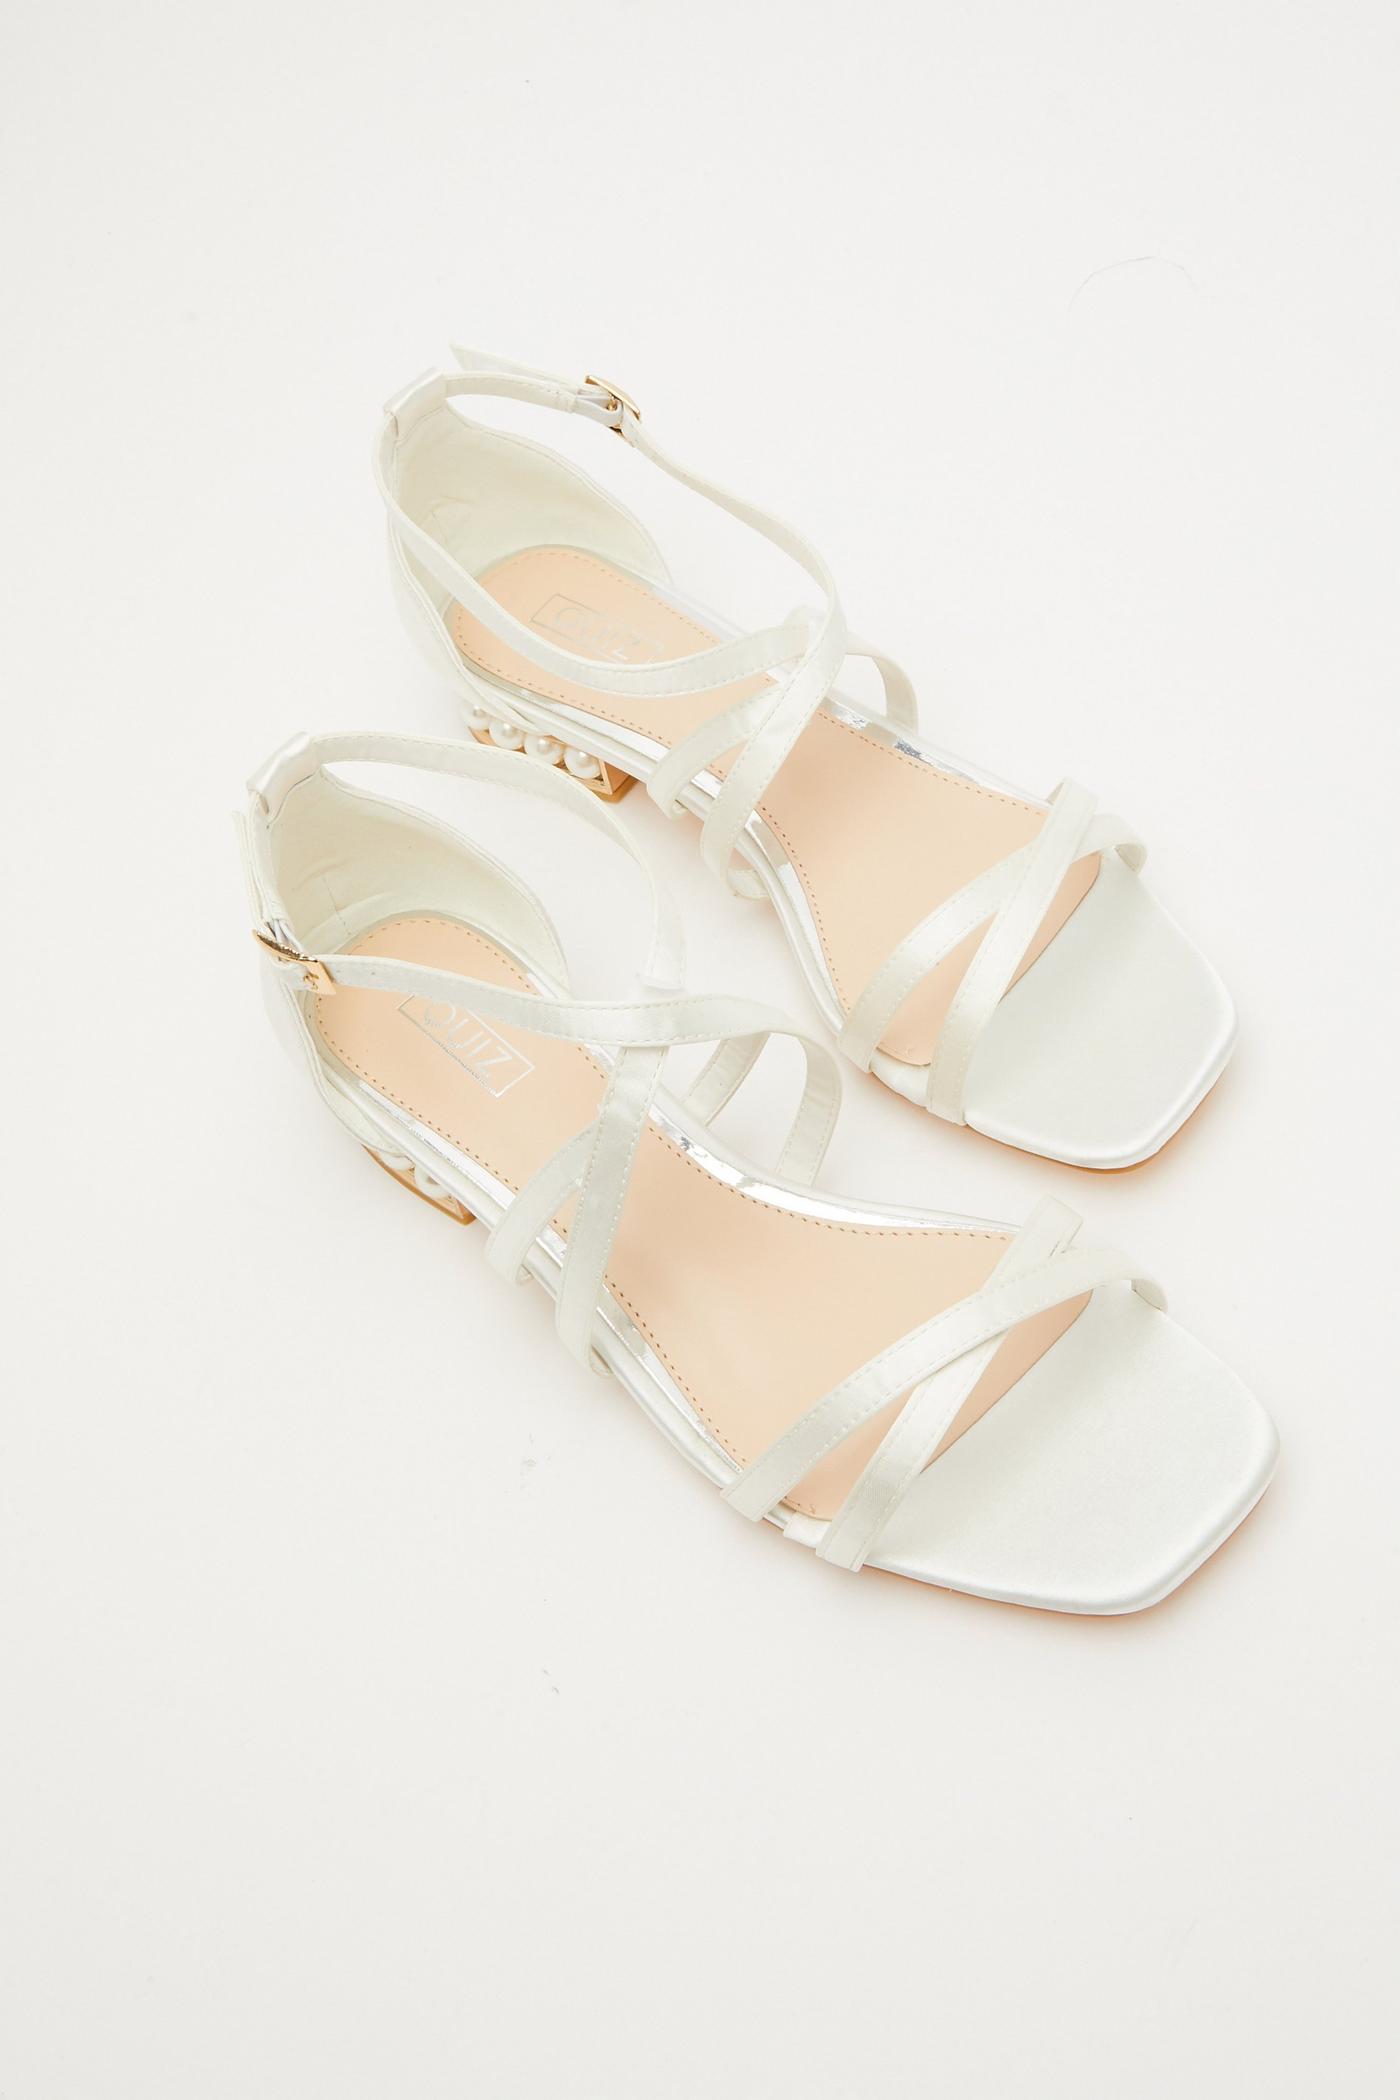 Quiz Clothing White Satin Pearl Flat Sandals